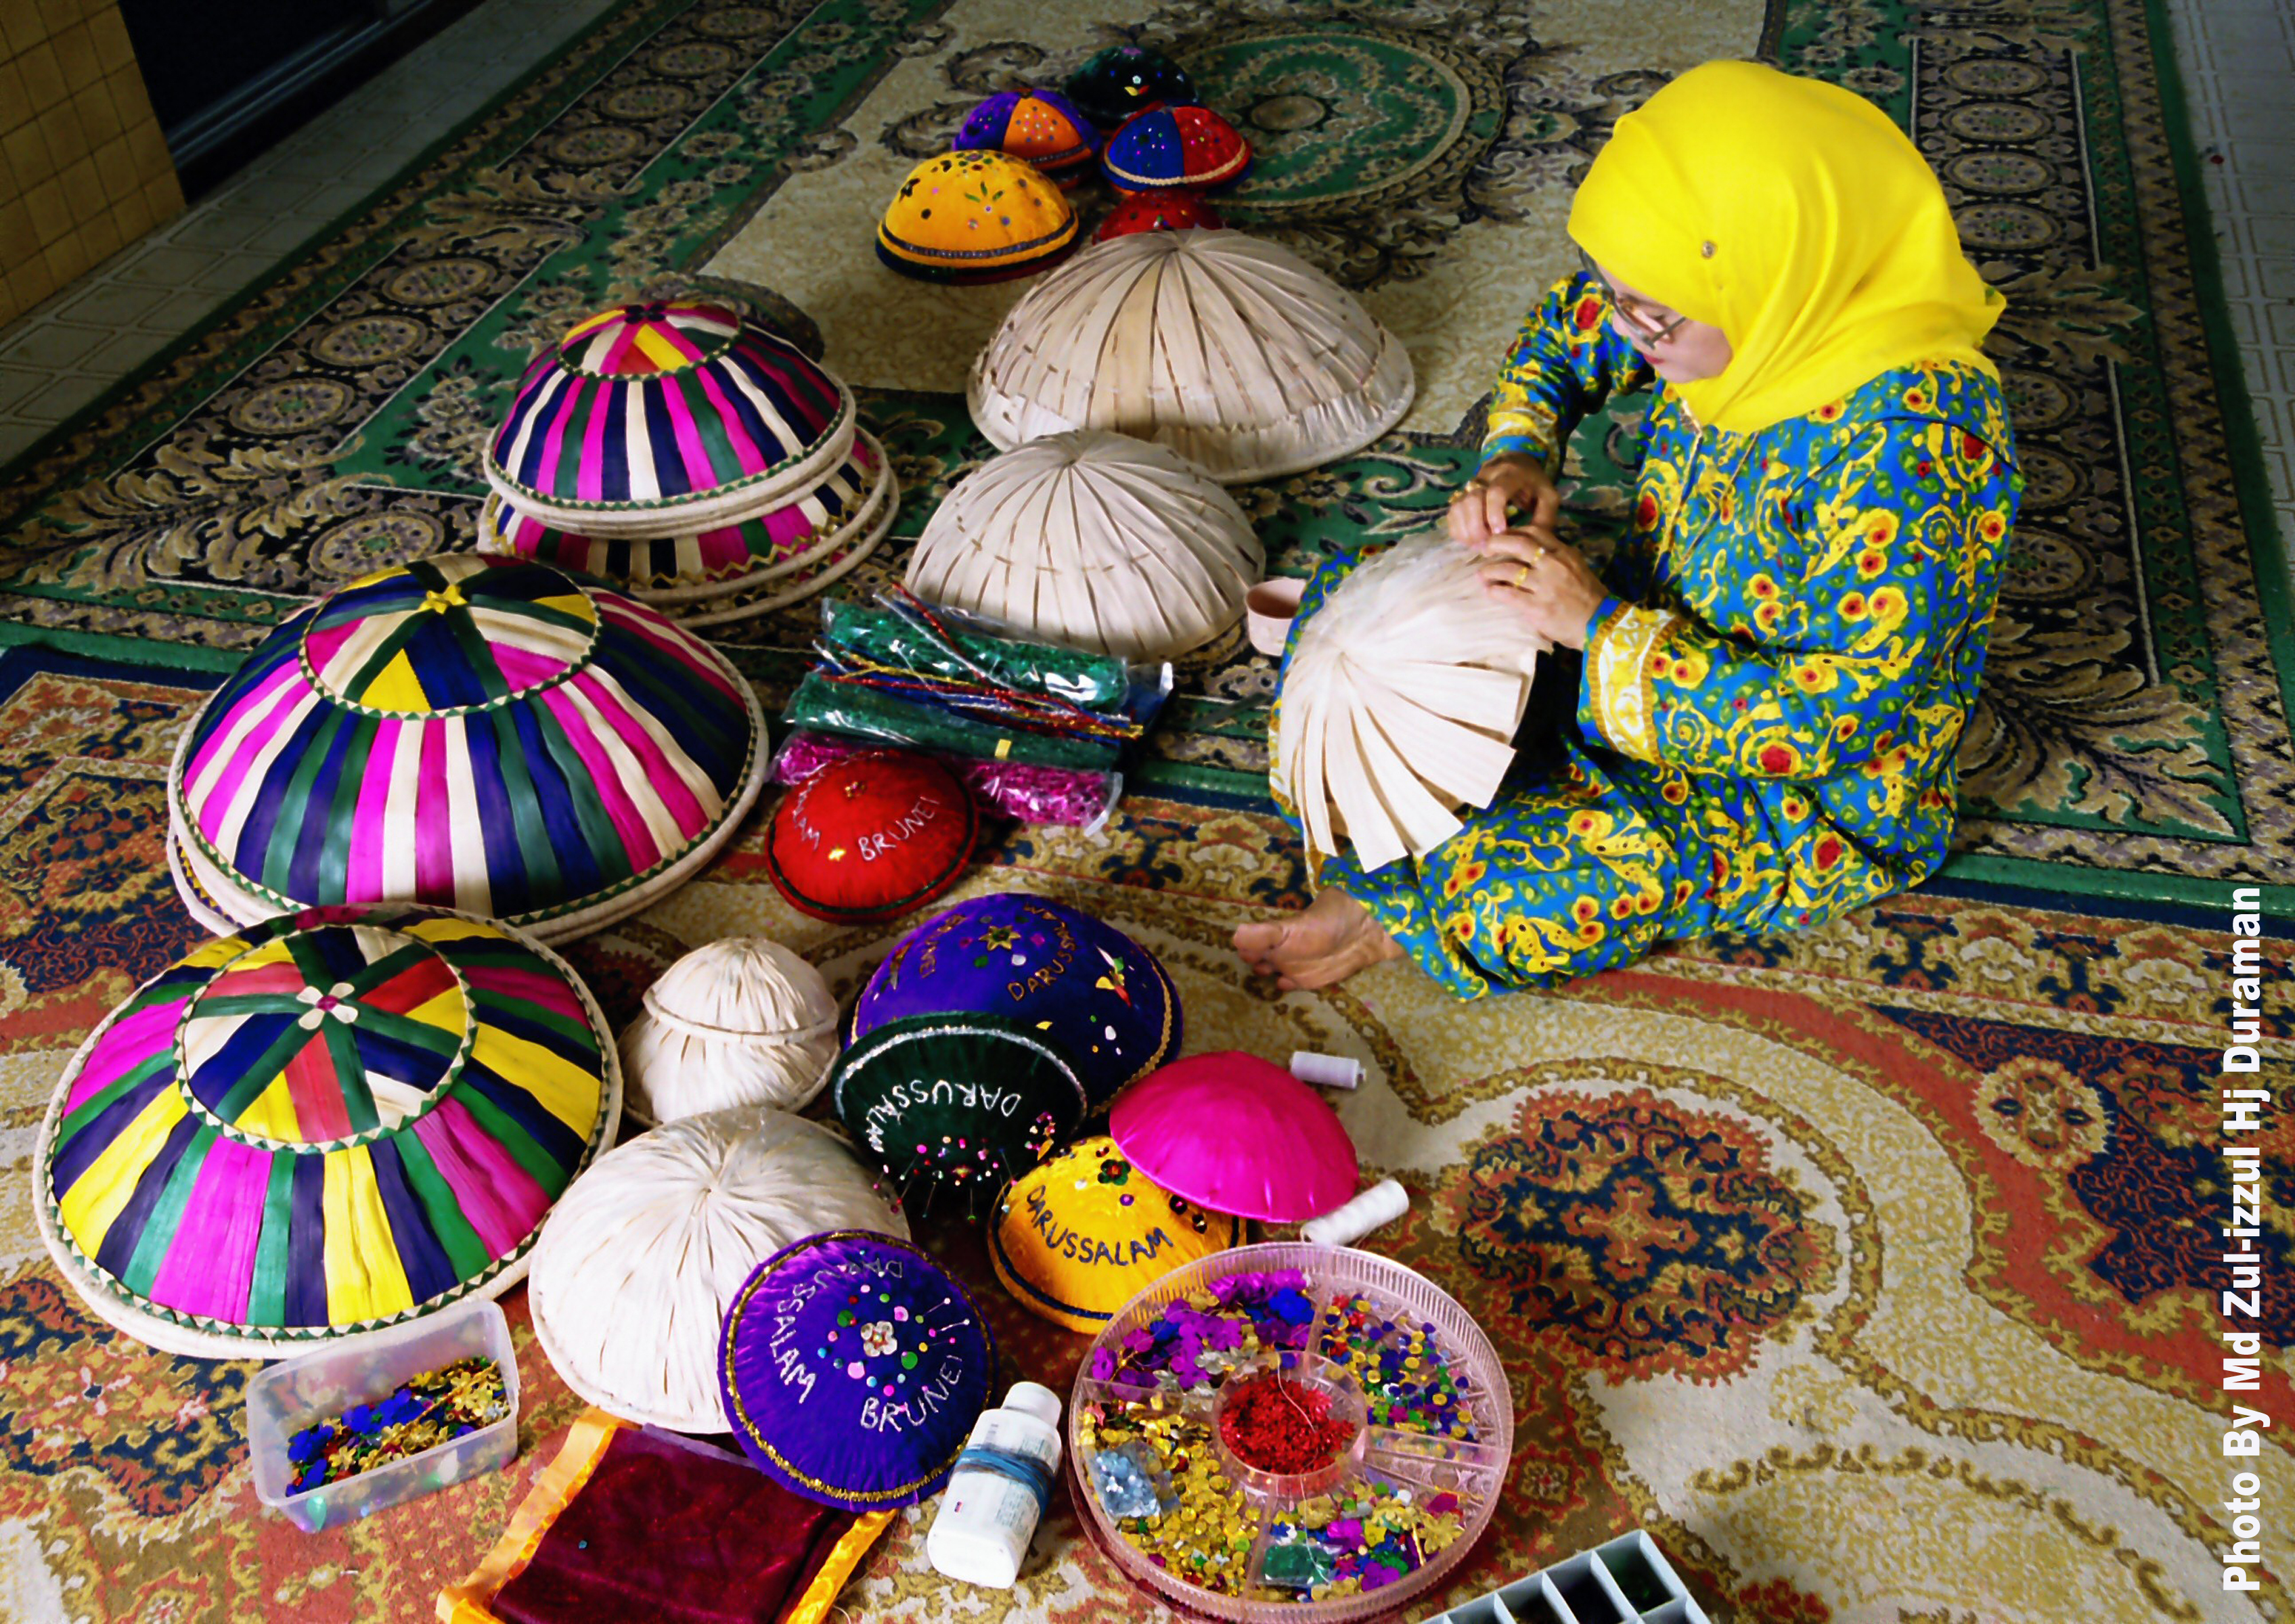 Making traditional dulang bowls, Brunei